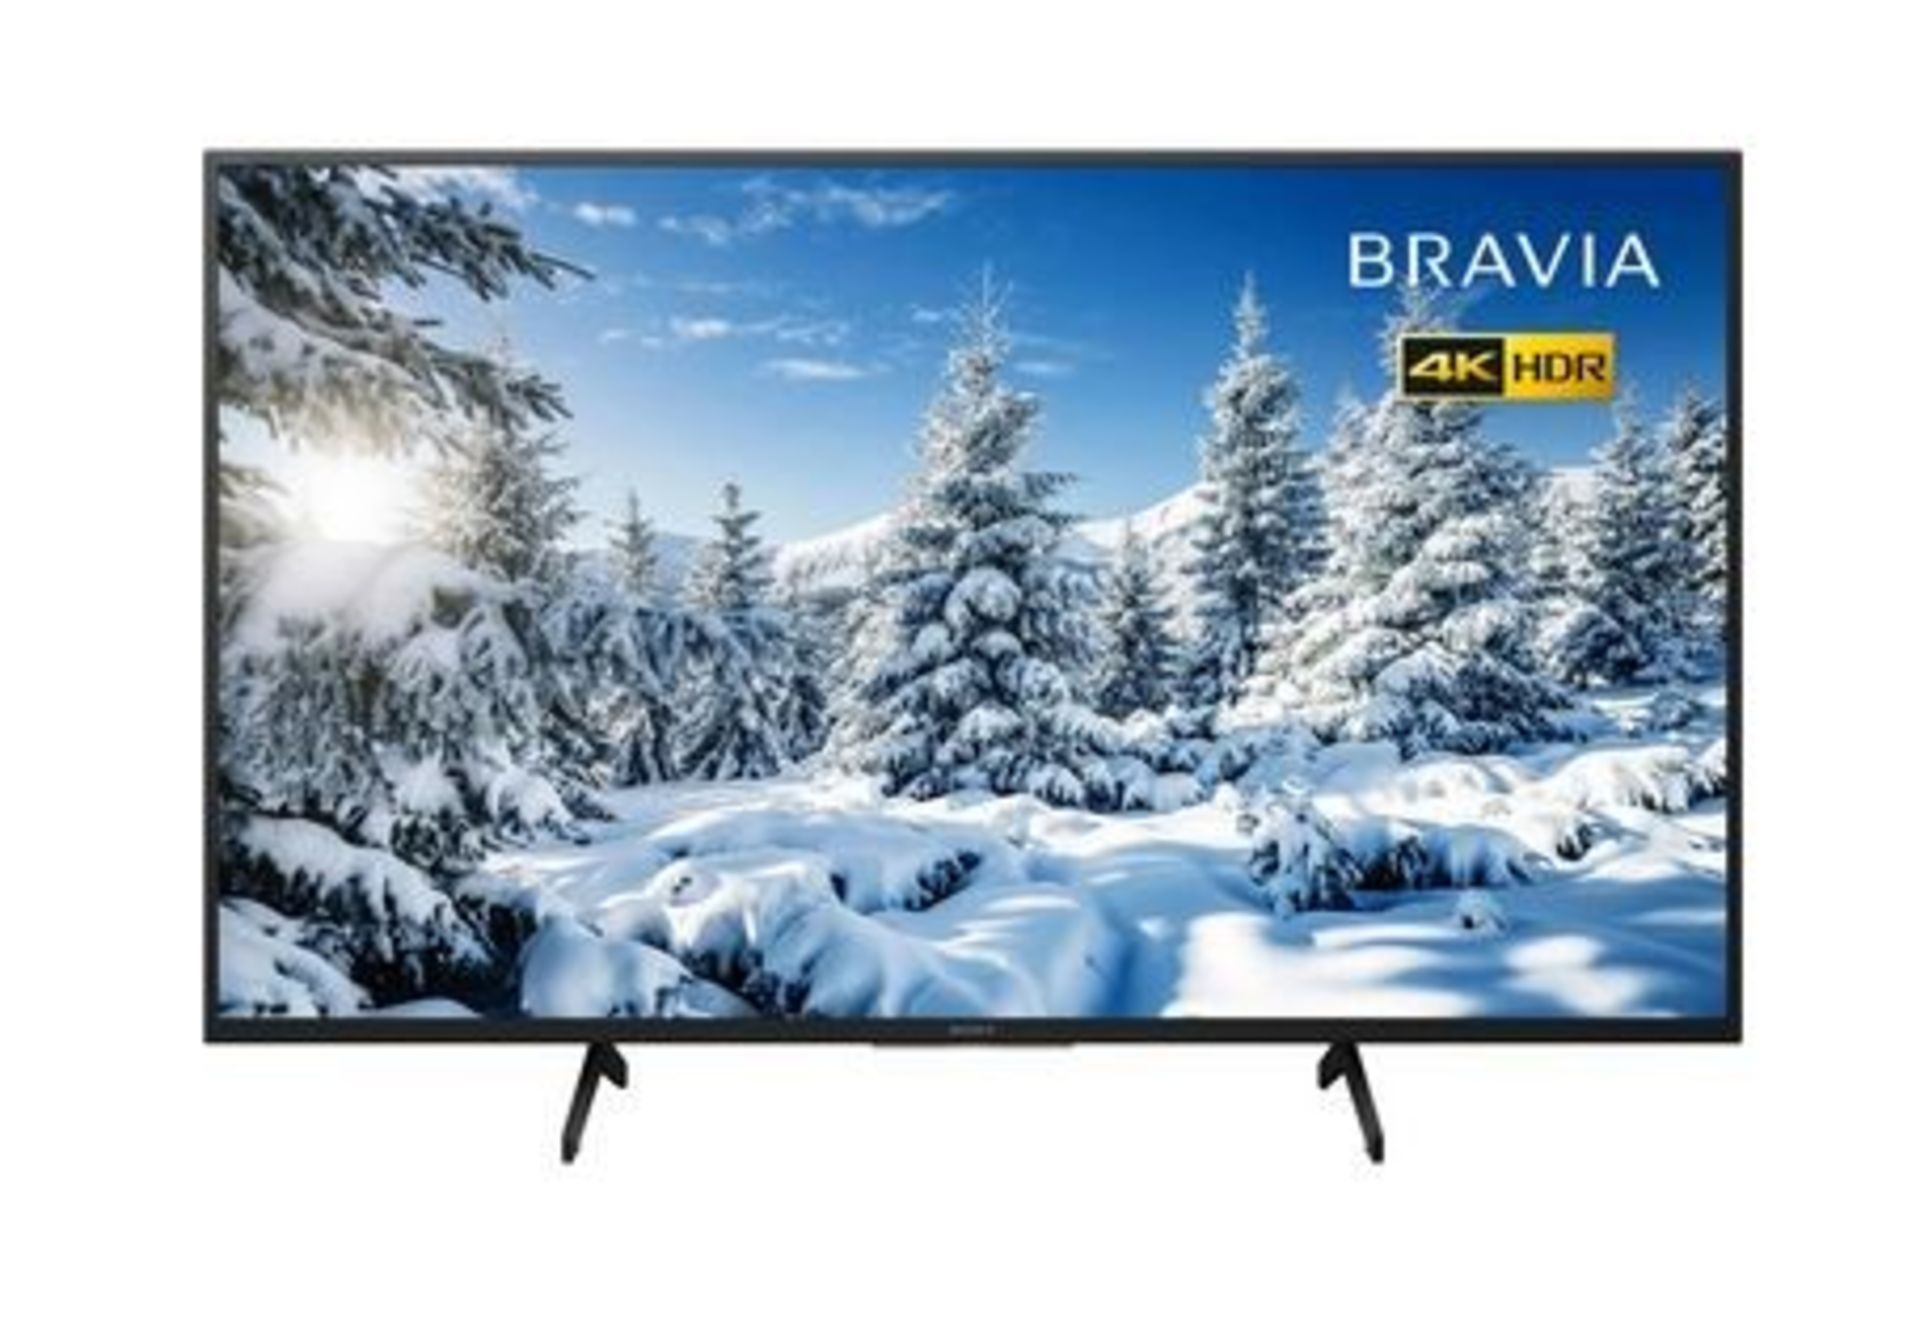 SONY BRAVIA 65" SMART ULTRA HD 4K LED TV - 65XG7093 / RRP £749.00 / TESTED AND WORKING. LIKE NEW,